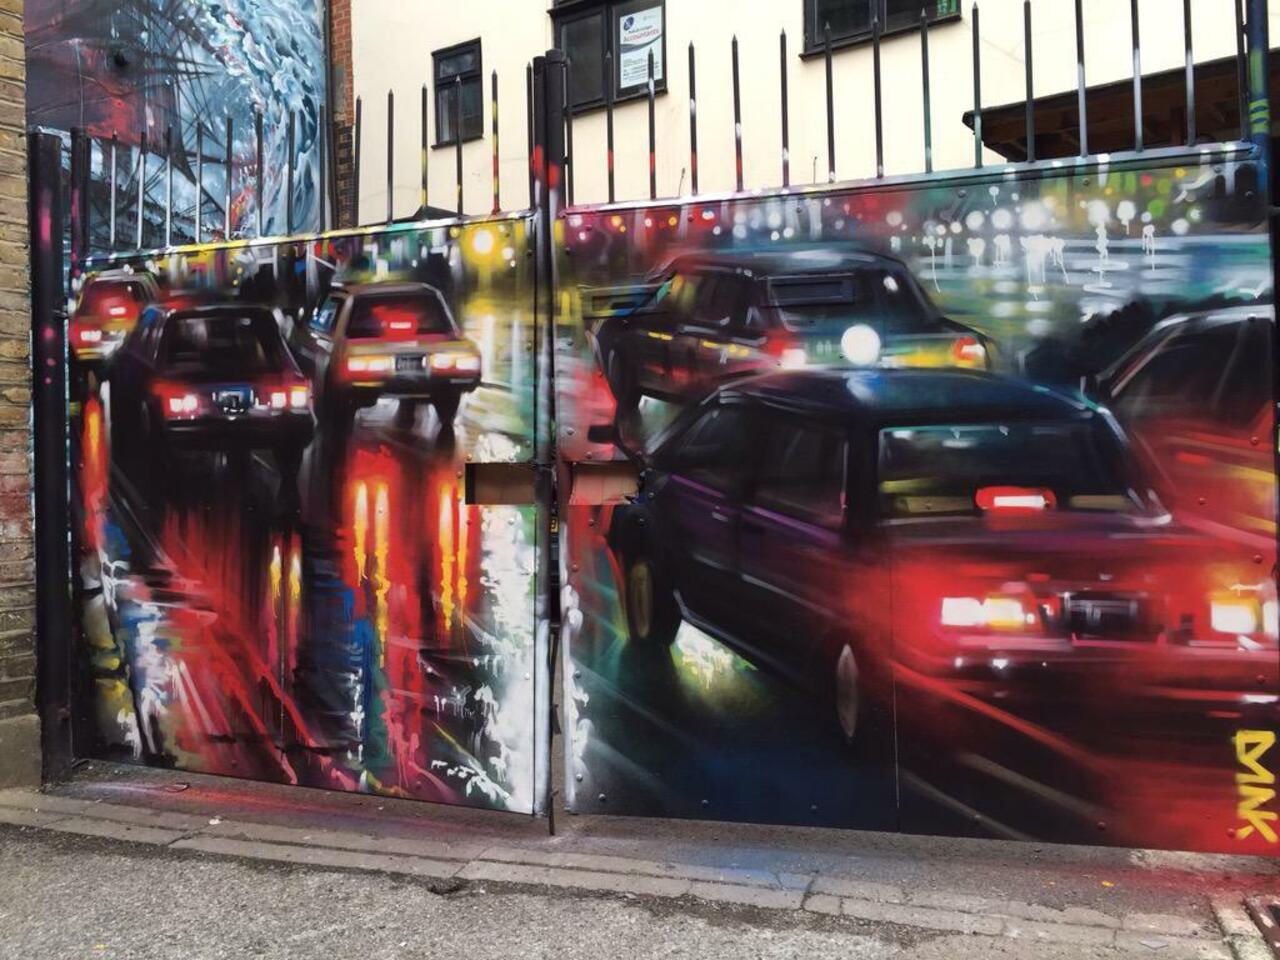 New Street Art by DanKitchener in Brick Lane London 

#art #graffiti #mural #streetart http://t.co/CE8ygvOQpZ